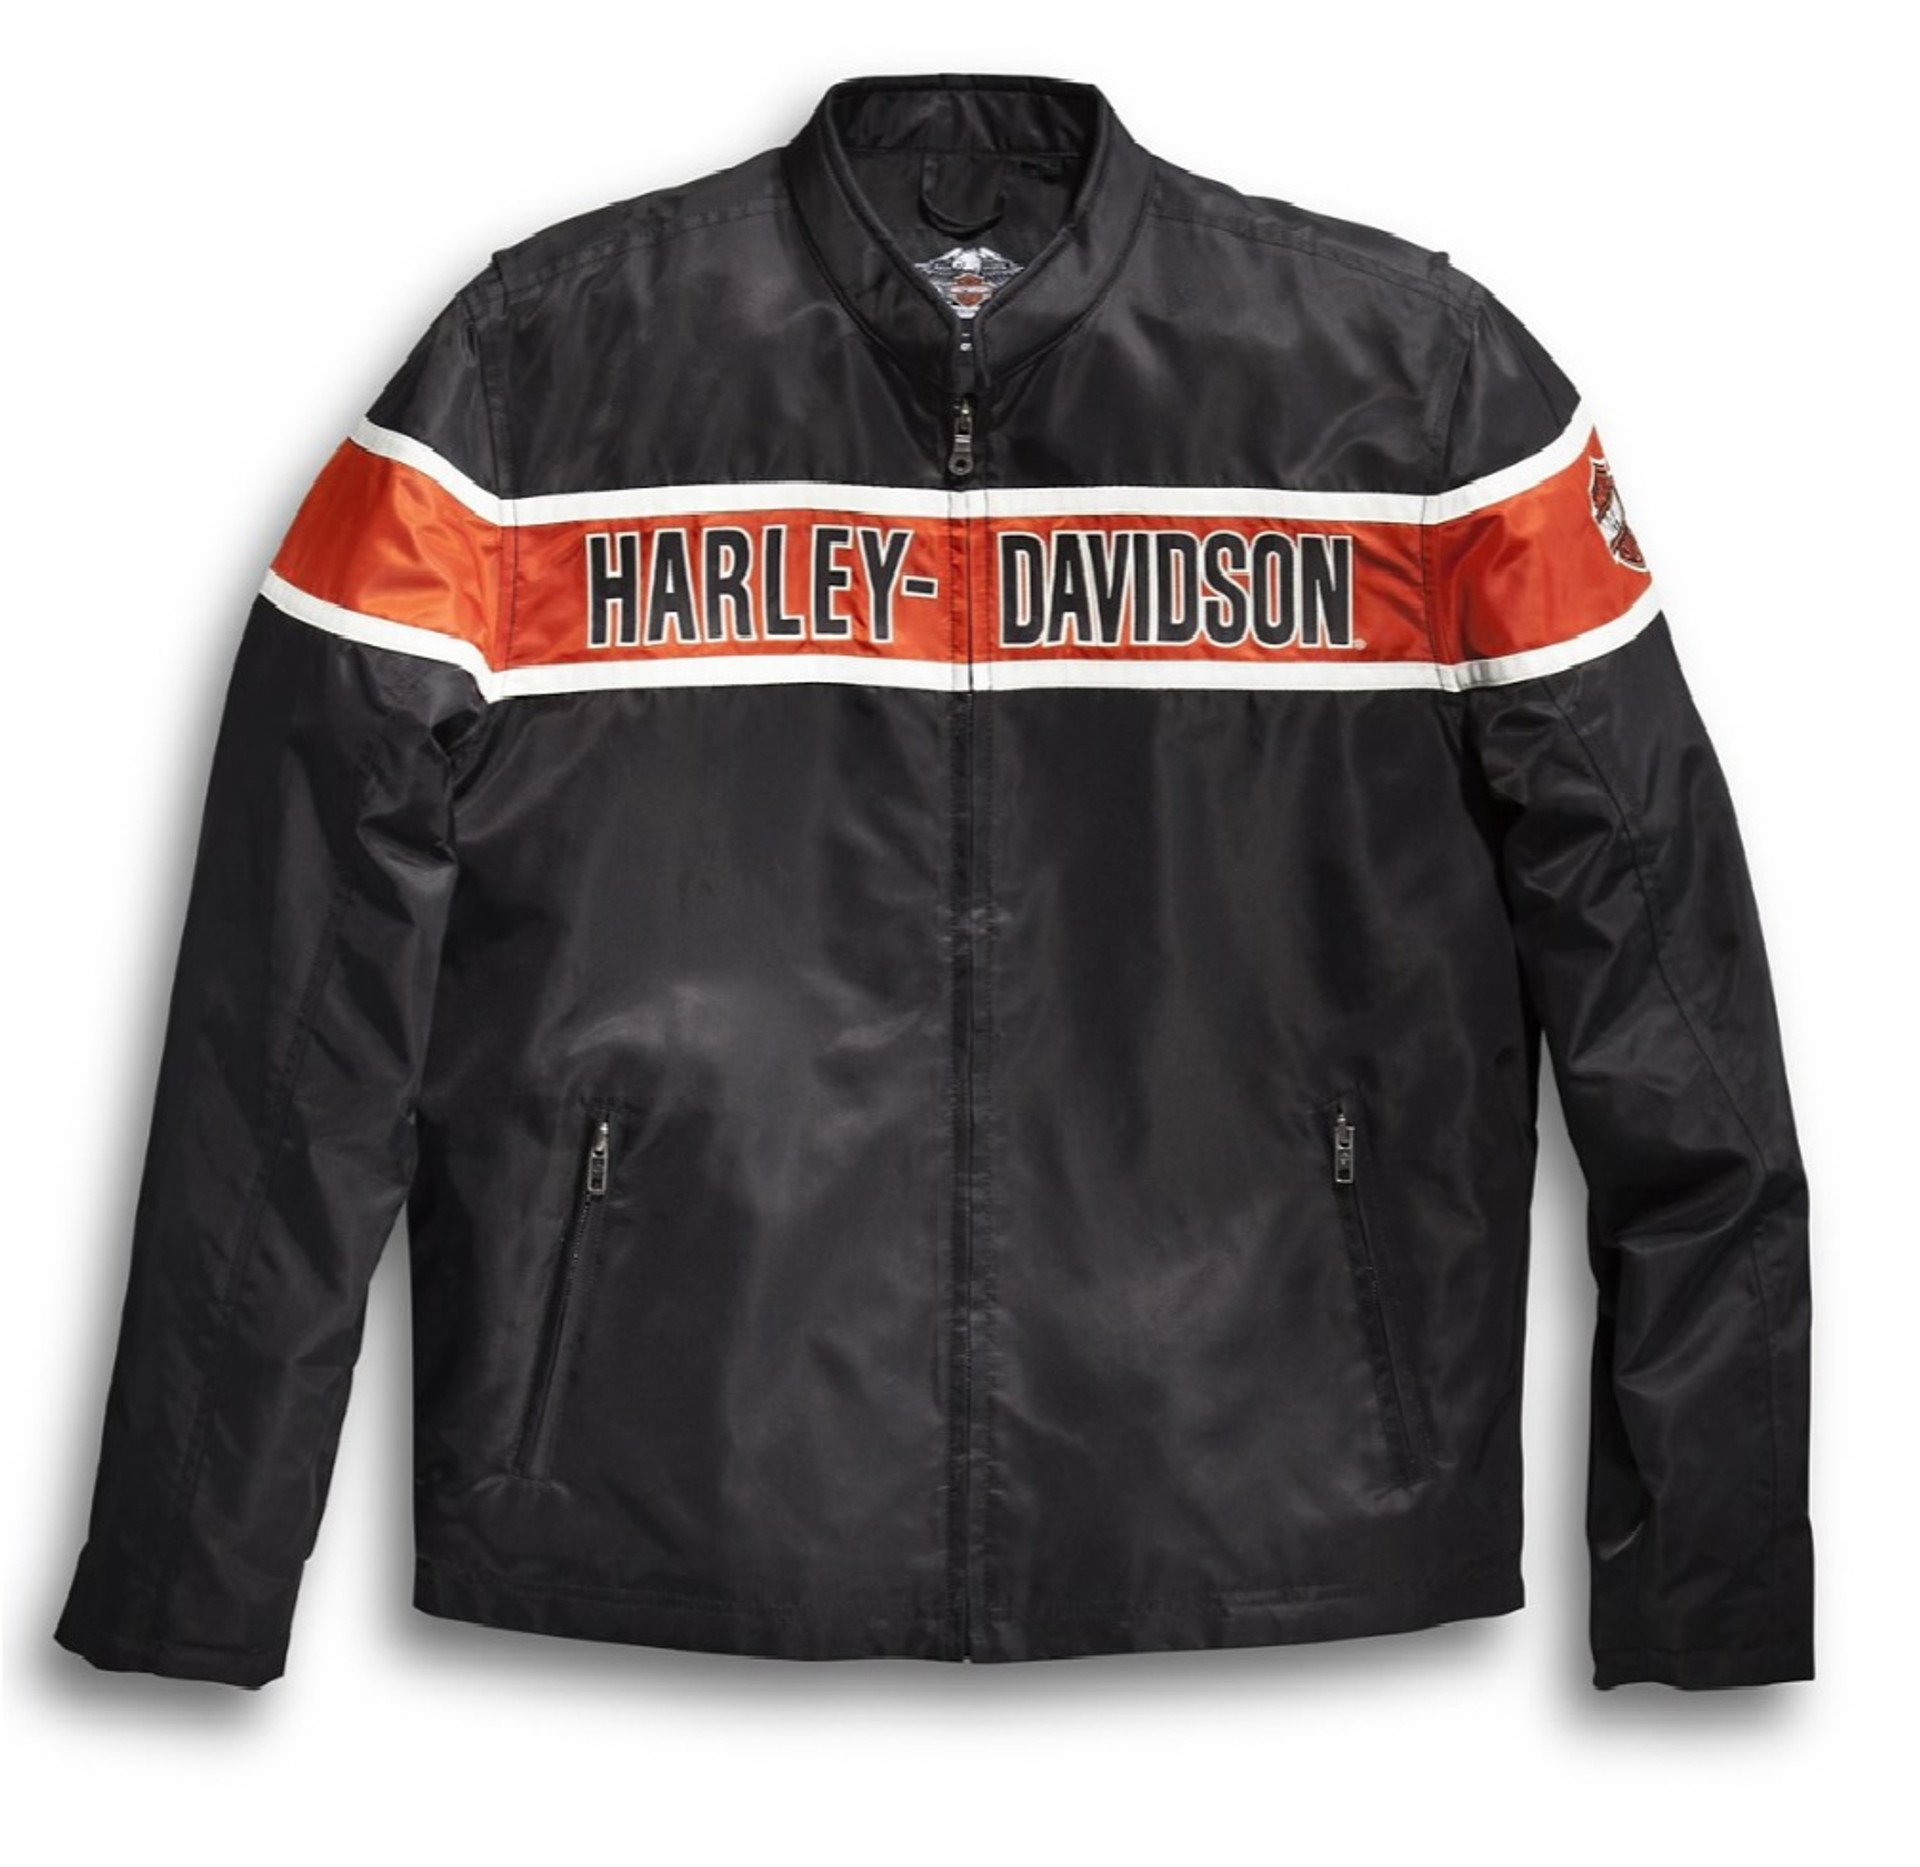 Pacific Harley-Davidson® - Harley Davidson Honolulu, Hawaii